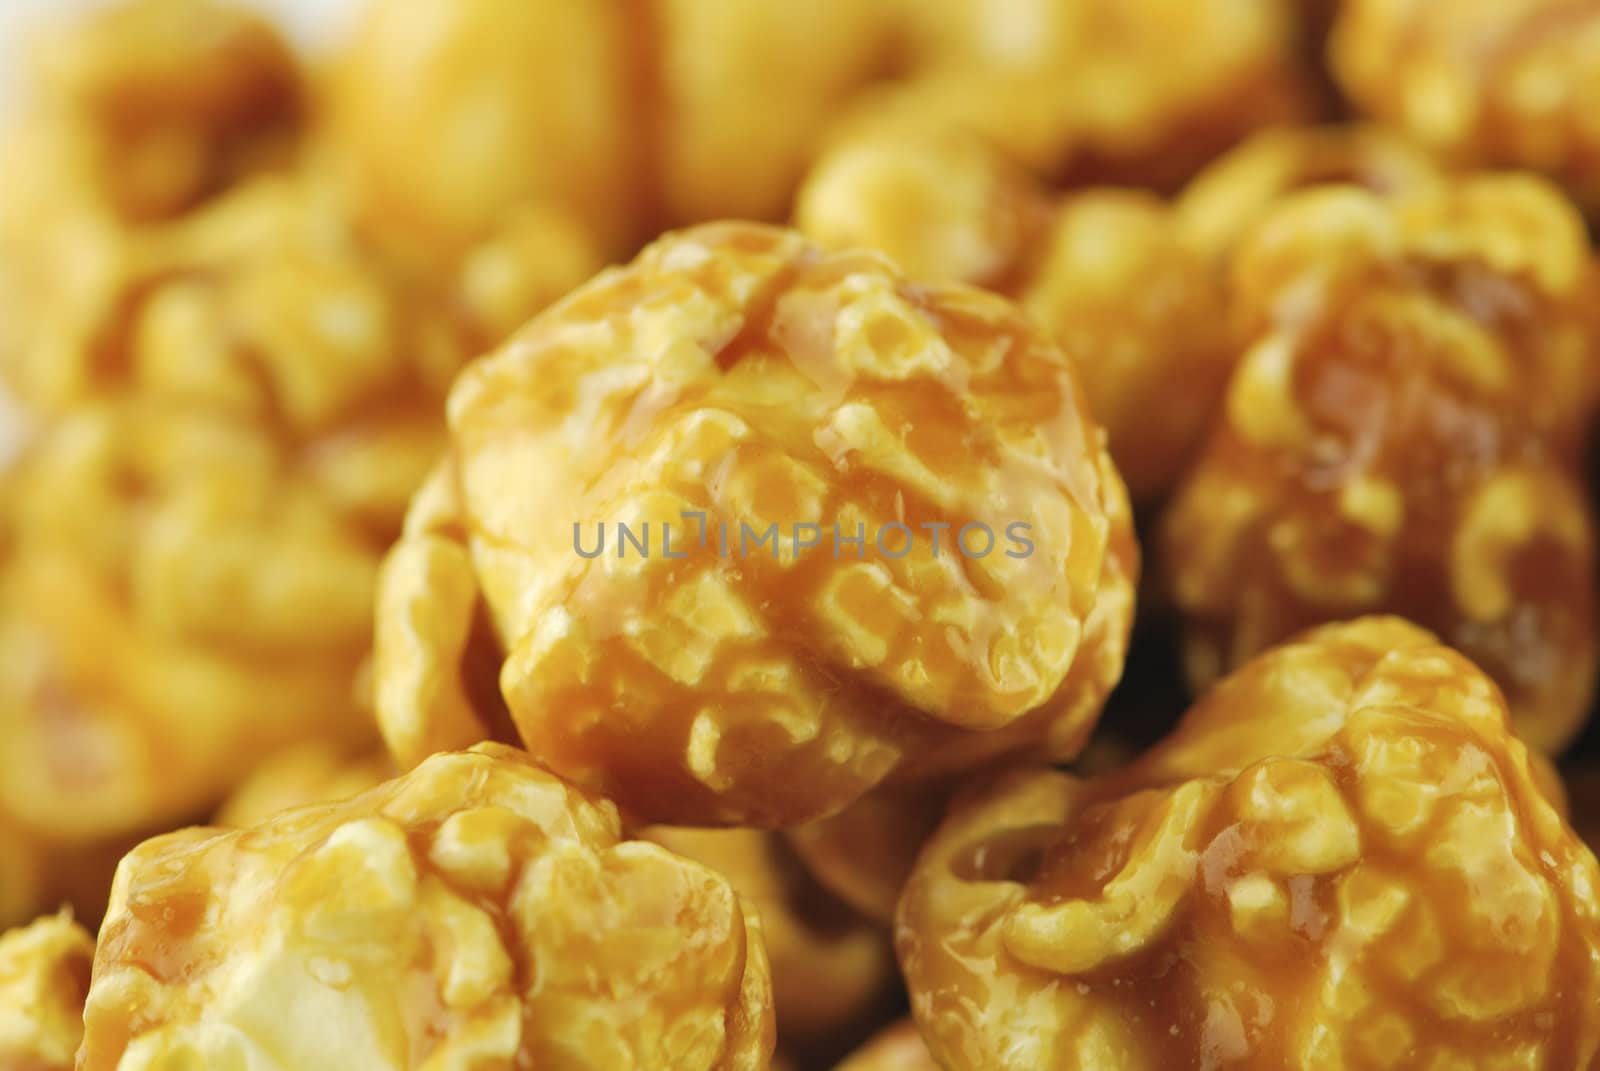 caramel popcorn by teen00000